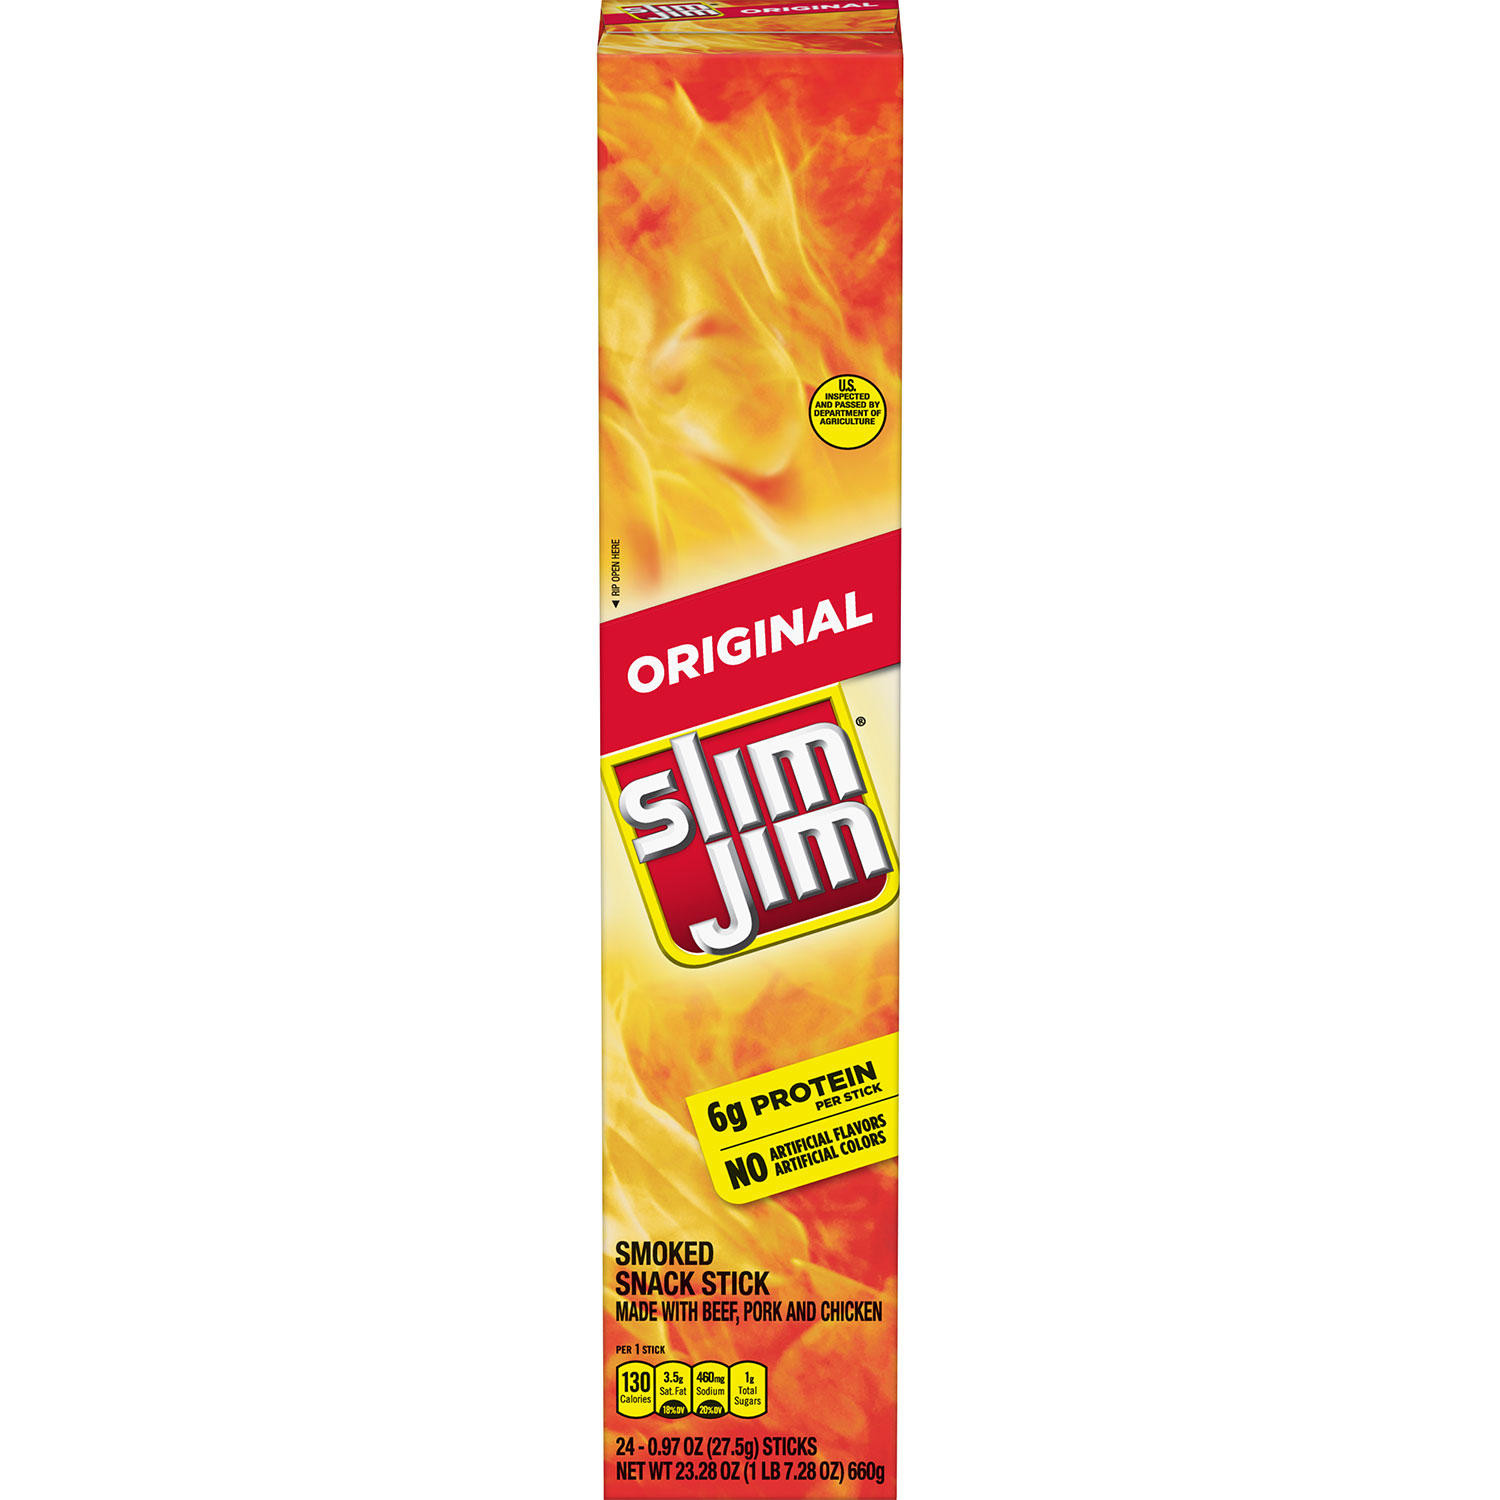 [SET OF 2] - Giant Slim Jim Snacks (24 ct.)